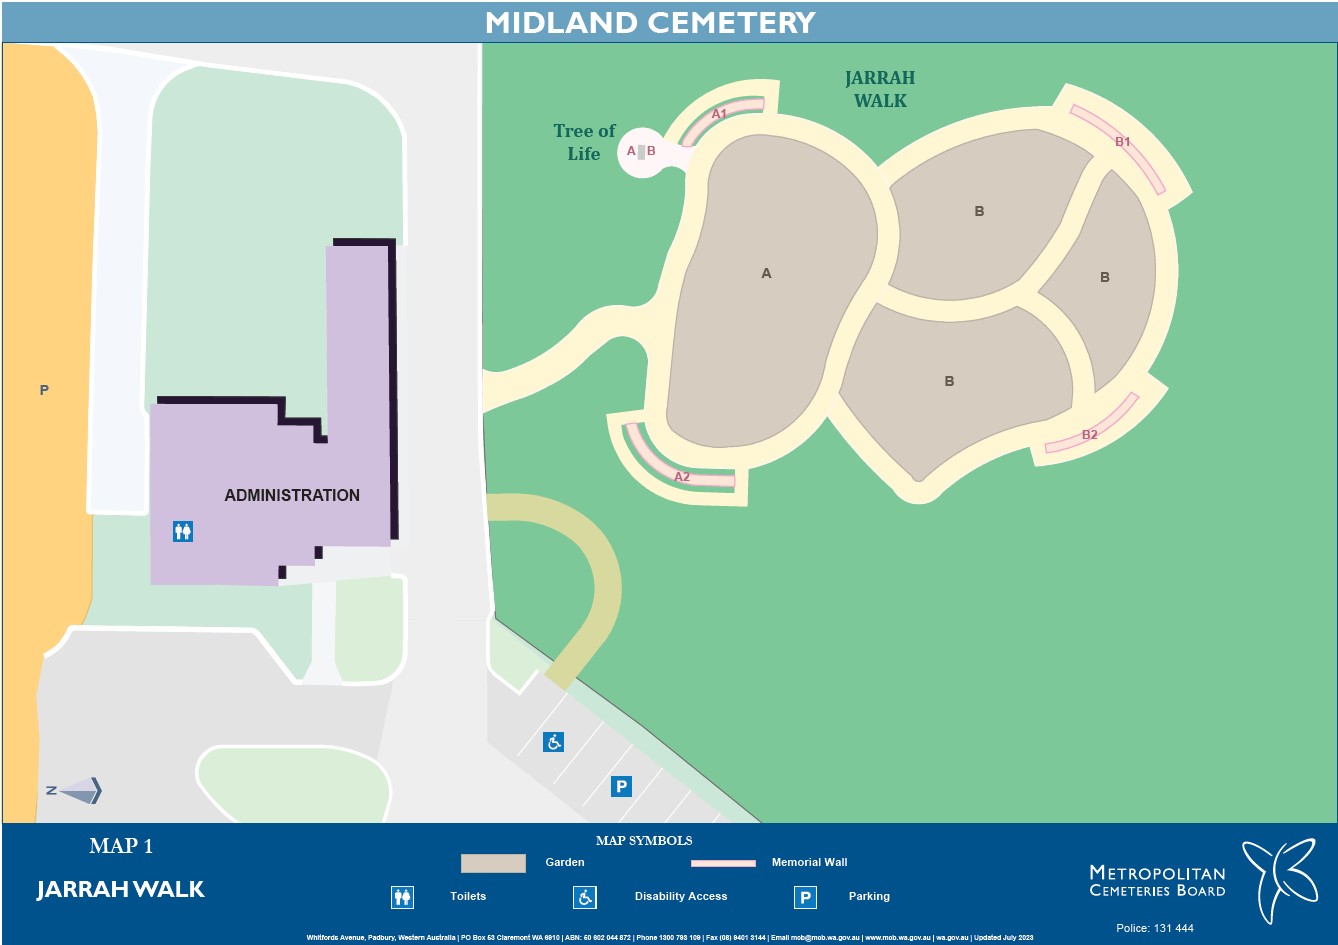 Map 1 Jarrah Walk Midland Cemetery